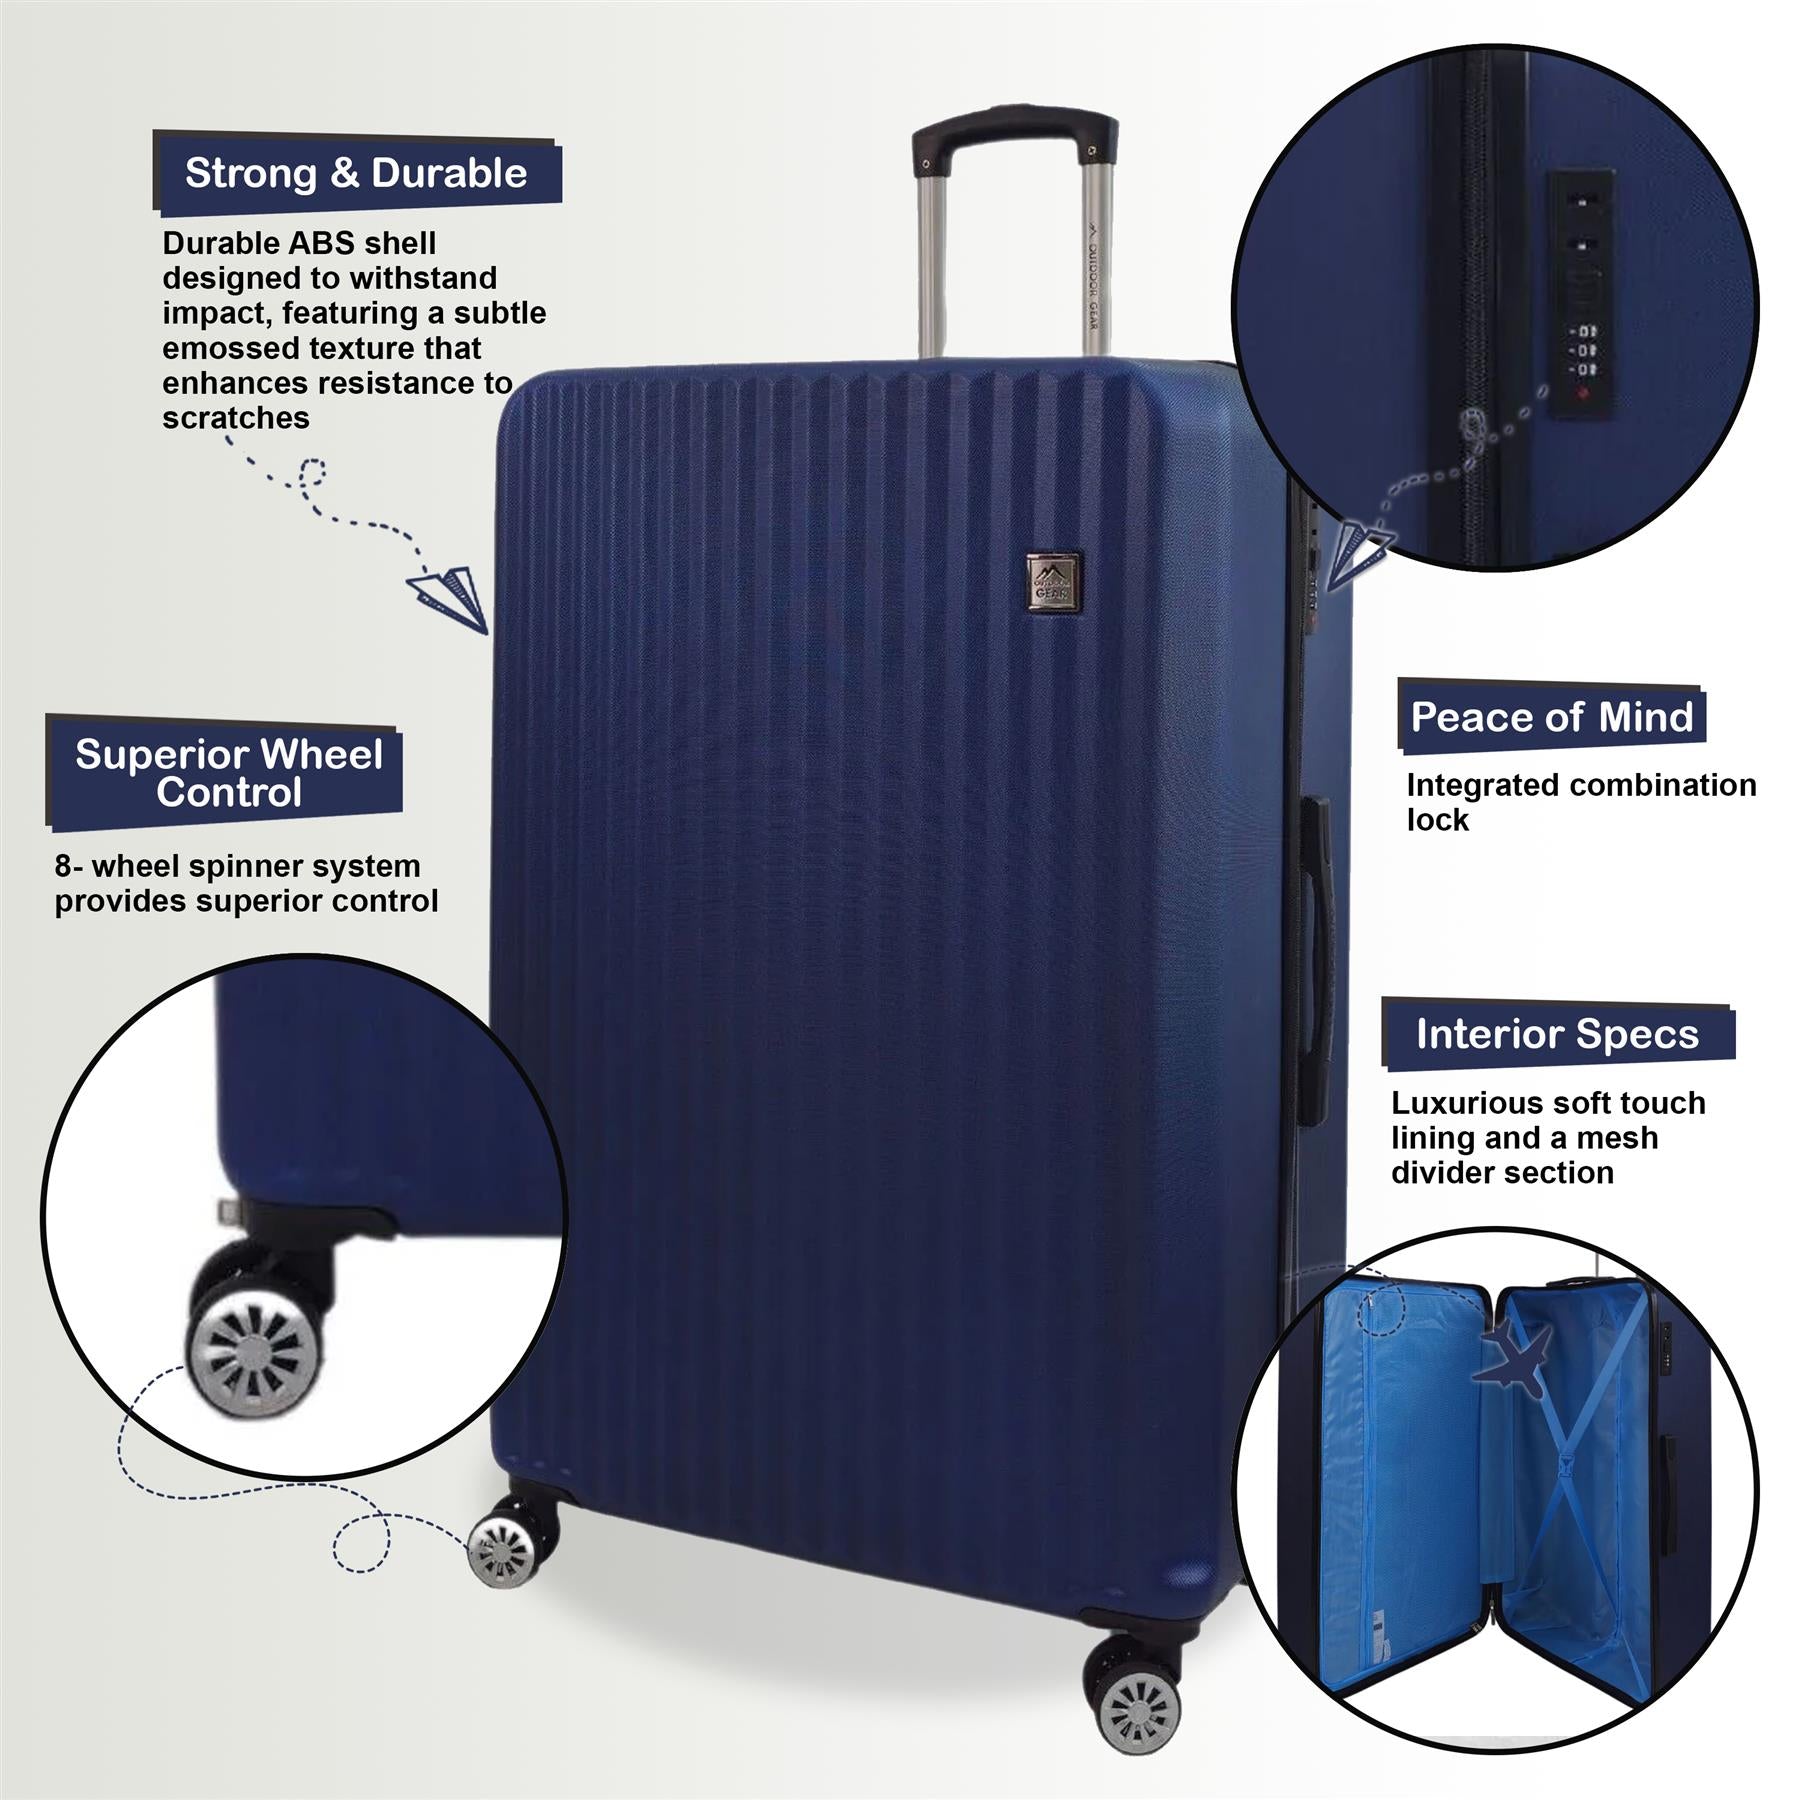 Albertville Large Hard Shell Suitcase in Blue